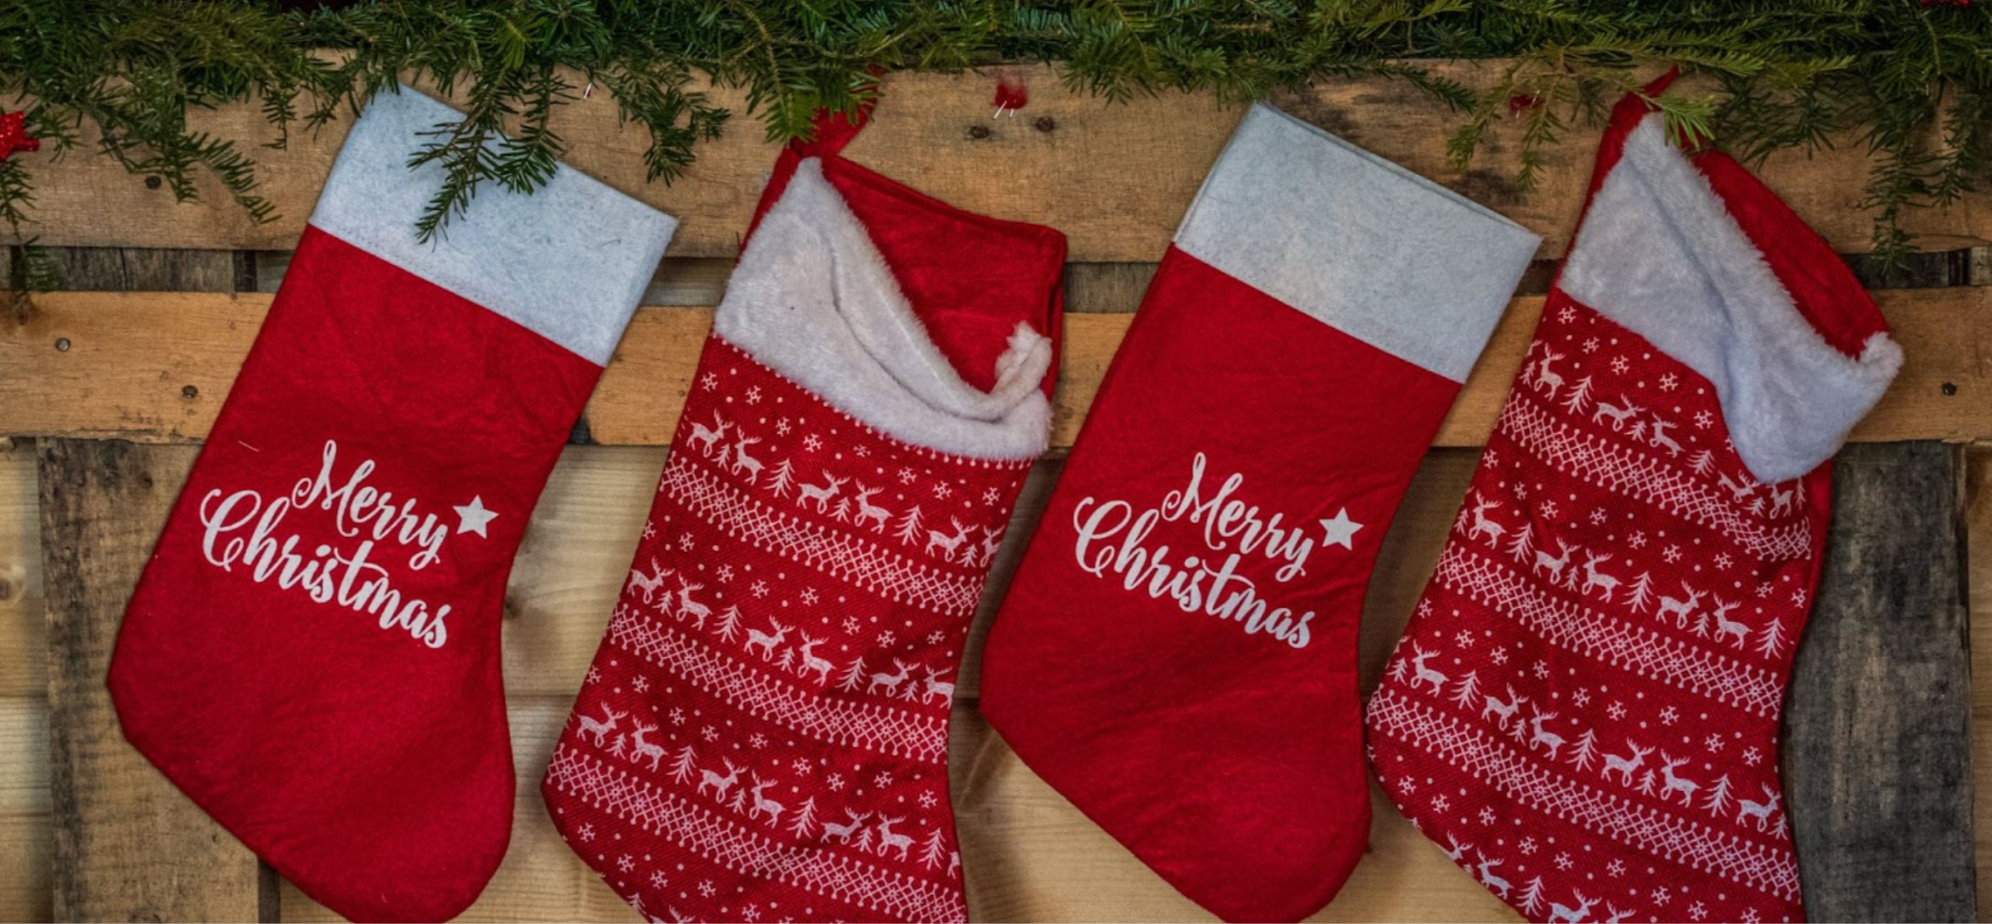 Row of four red Christmas stockings